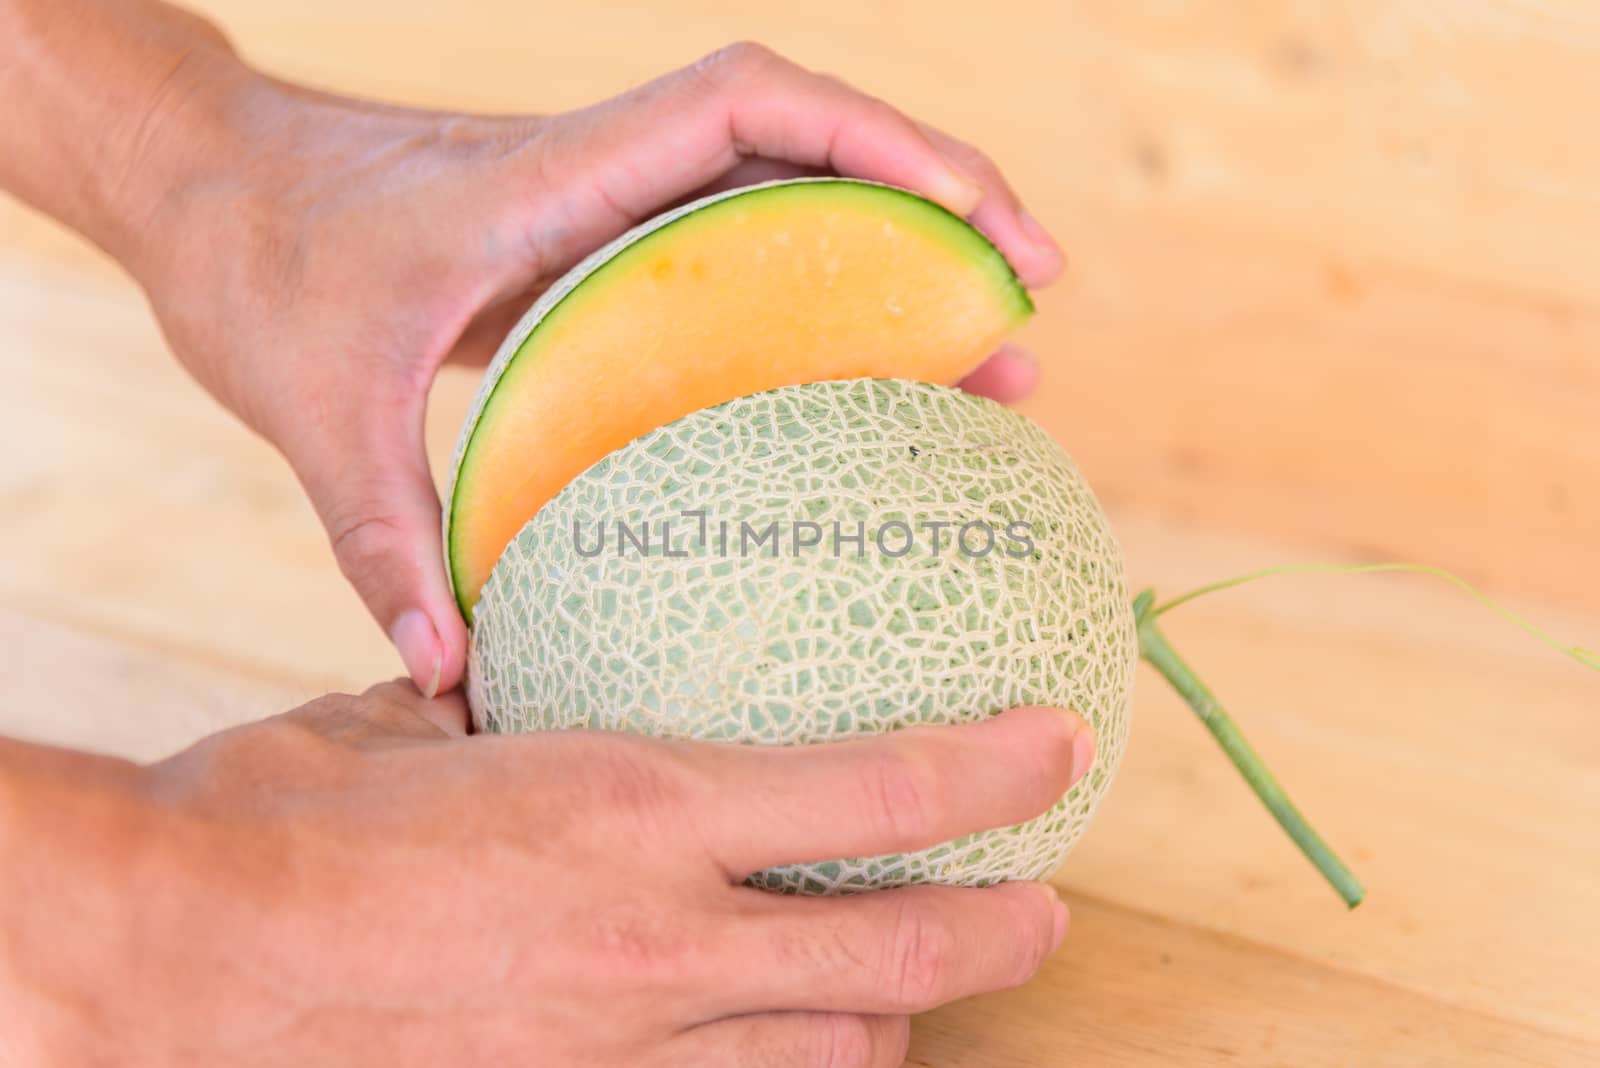 The man use knife split the orange melon on wood plate by rukawajung